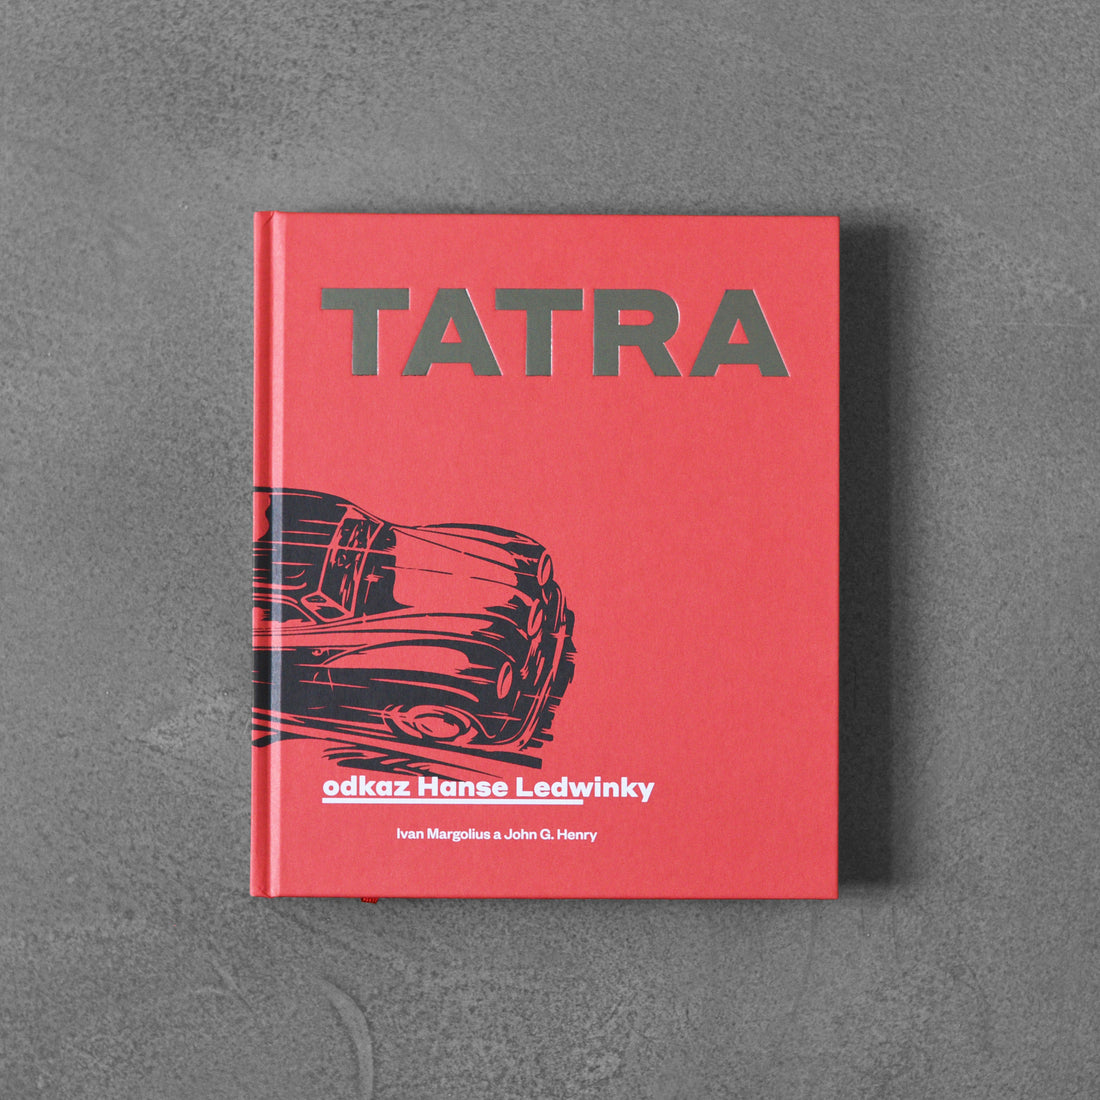 Tatra: odkaz Hanse Ledwinky - Ivan Margolius, John G. Henry